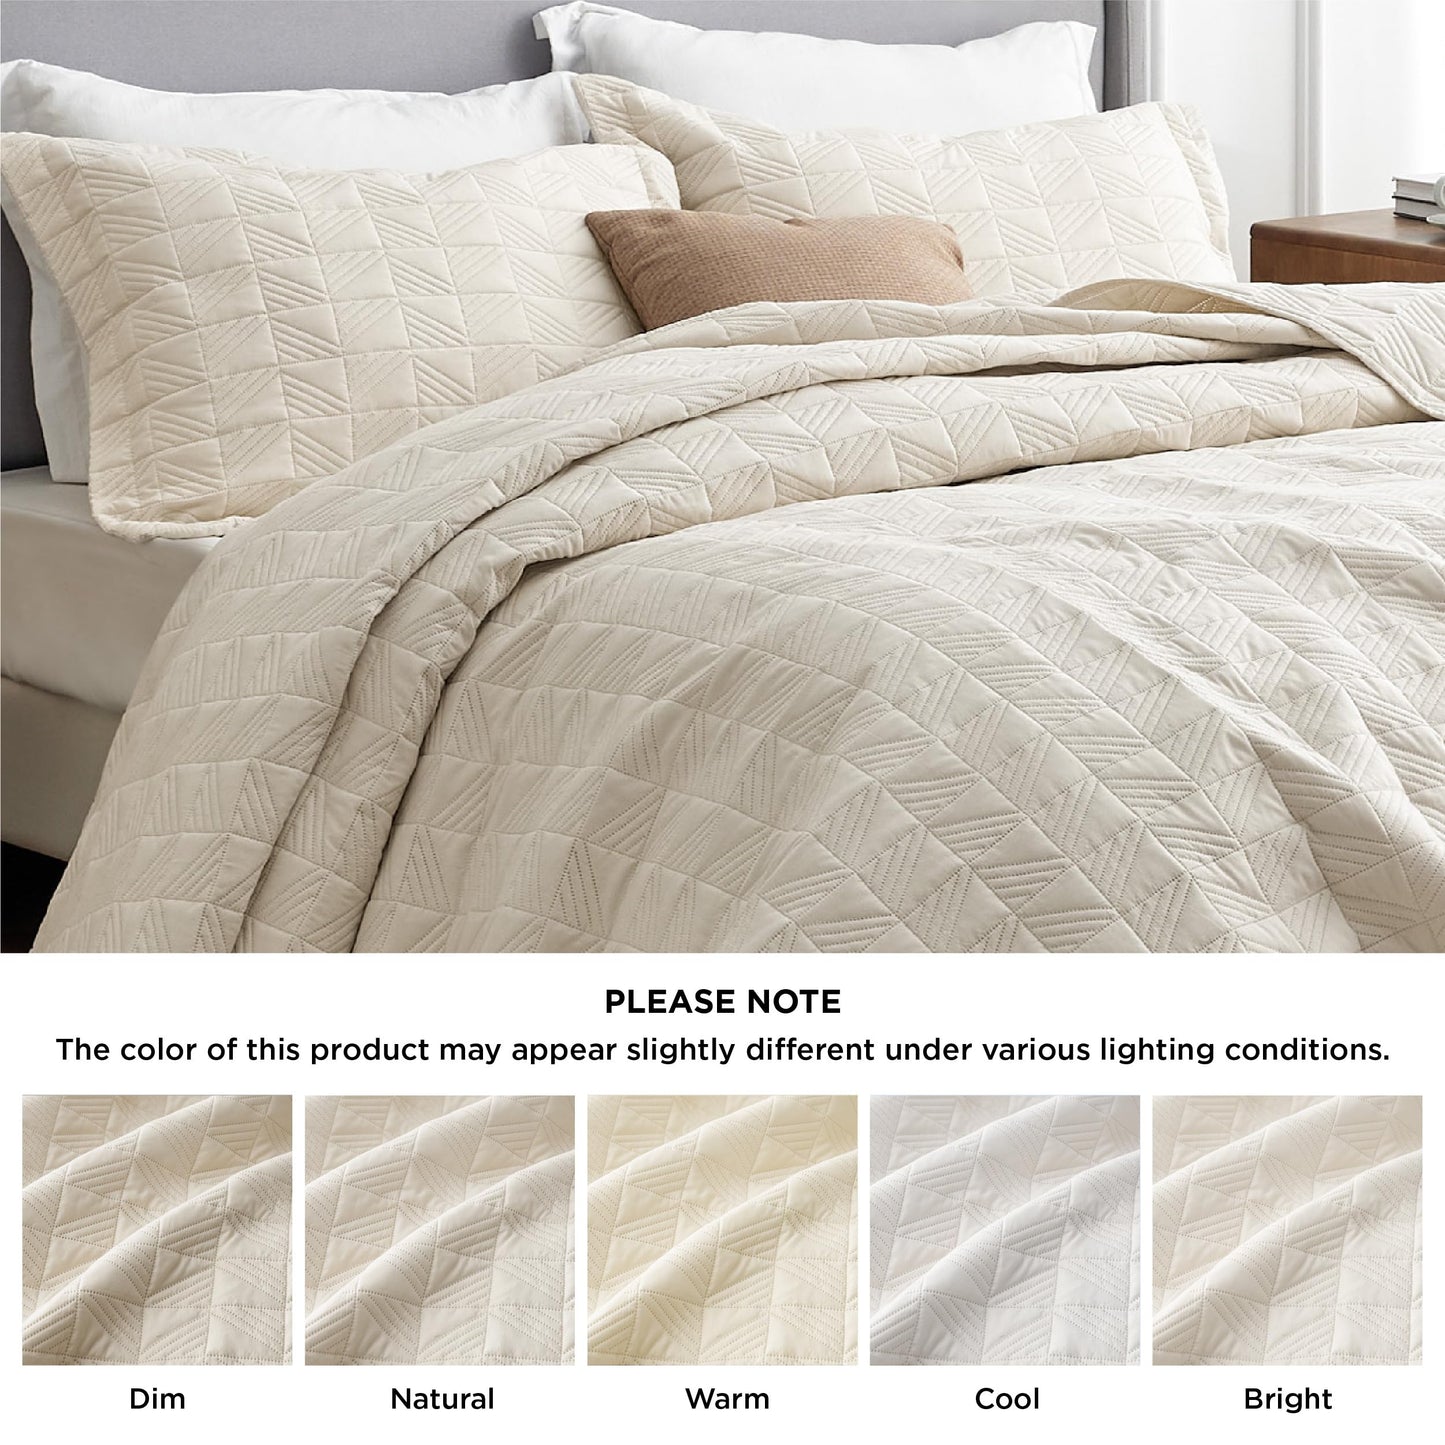 Bedsure Queen Quilt Bedding Set - Soft Ultrasonic Full/Queen Quilt Set - Geometric Bedspread Queen Size - Lightweight Bedding Coverlet for All Seasons (Includes 1 Beige Quilt, 2 Pillow Shams)